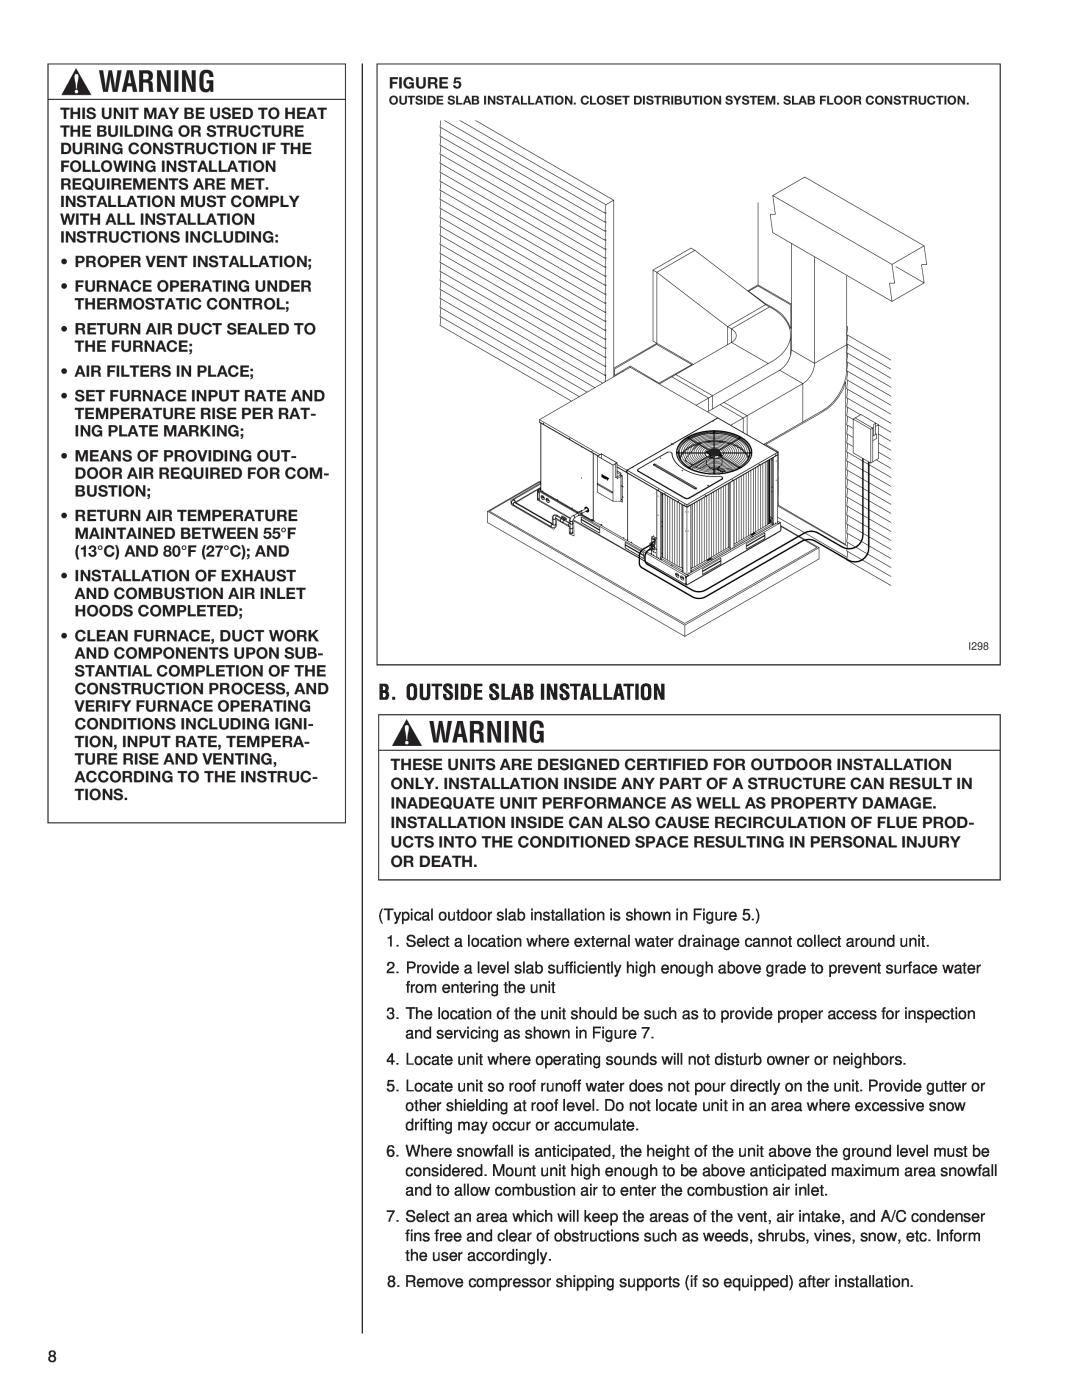 Heat Controller A-13 installation instructions B. Outside Slab Installation 